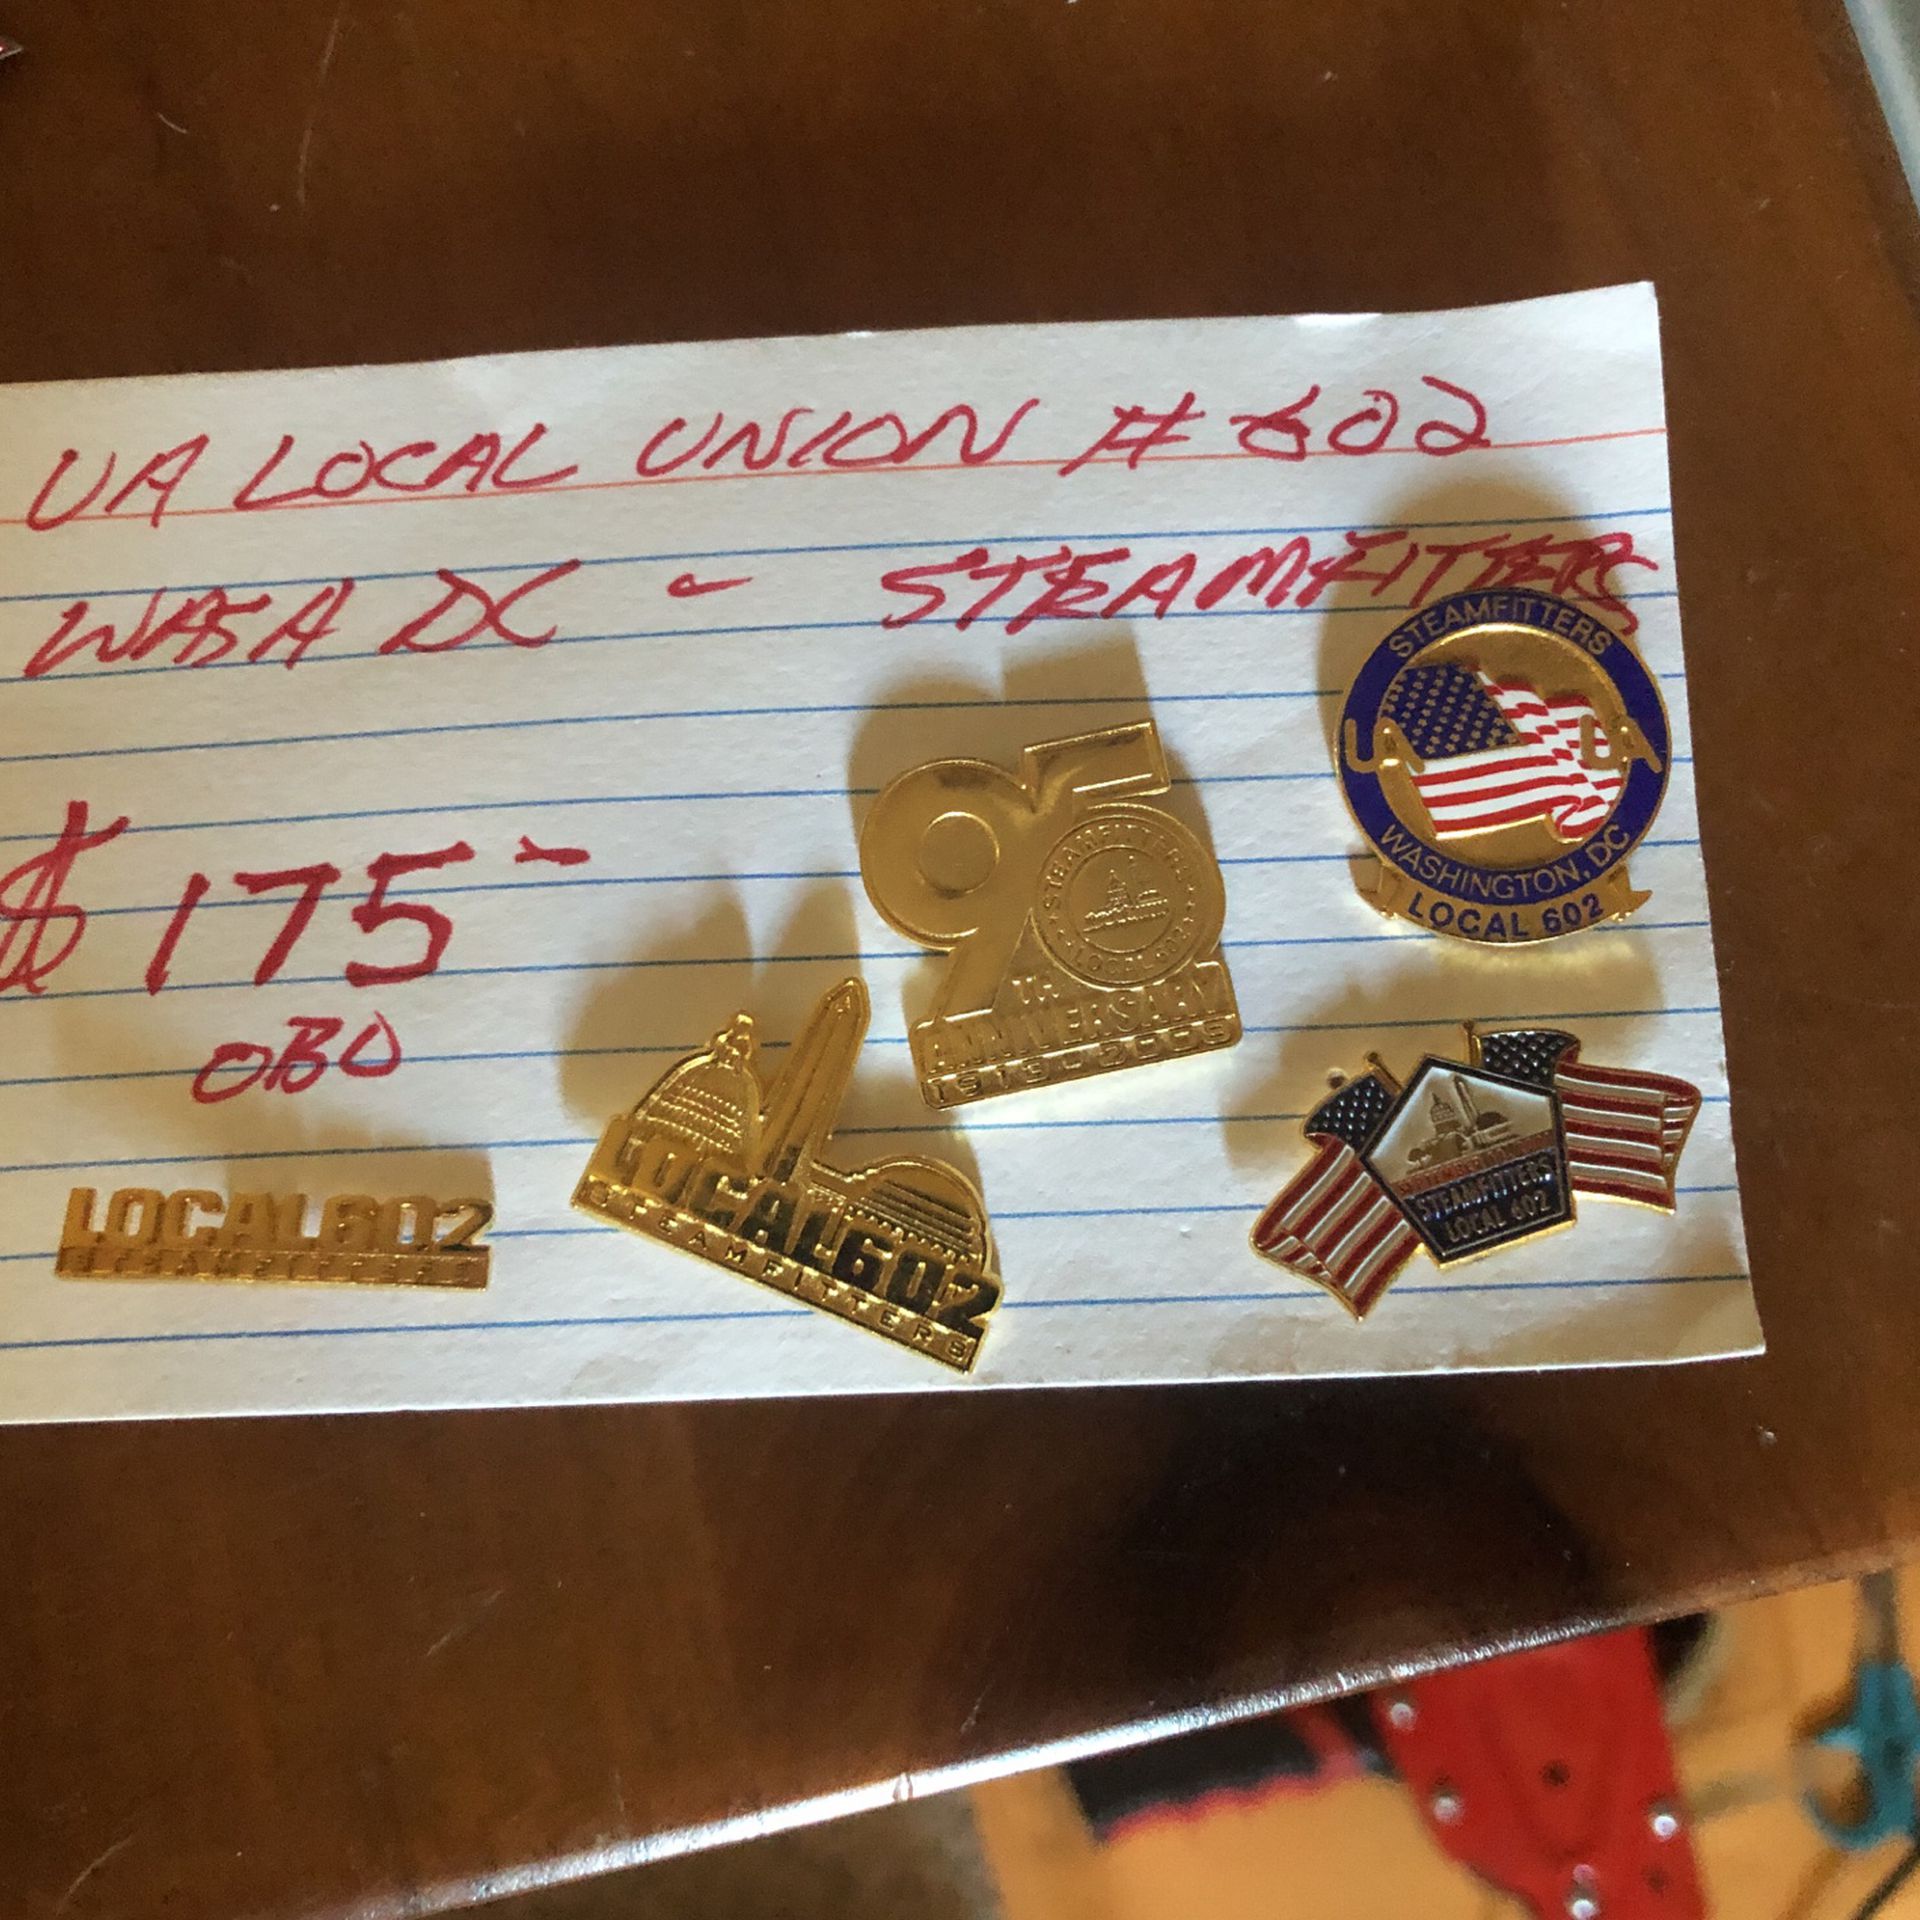 $275 United Association Union Pin From Washington D. C.